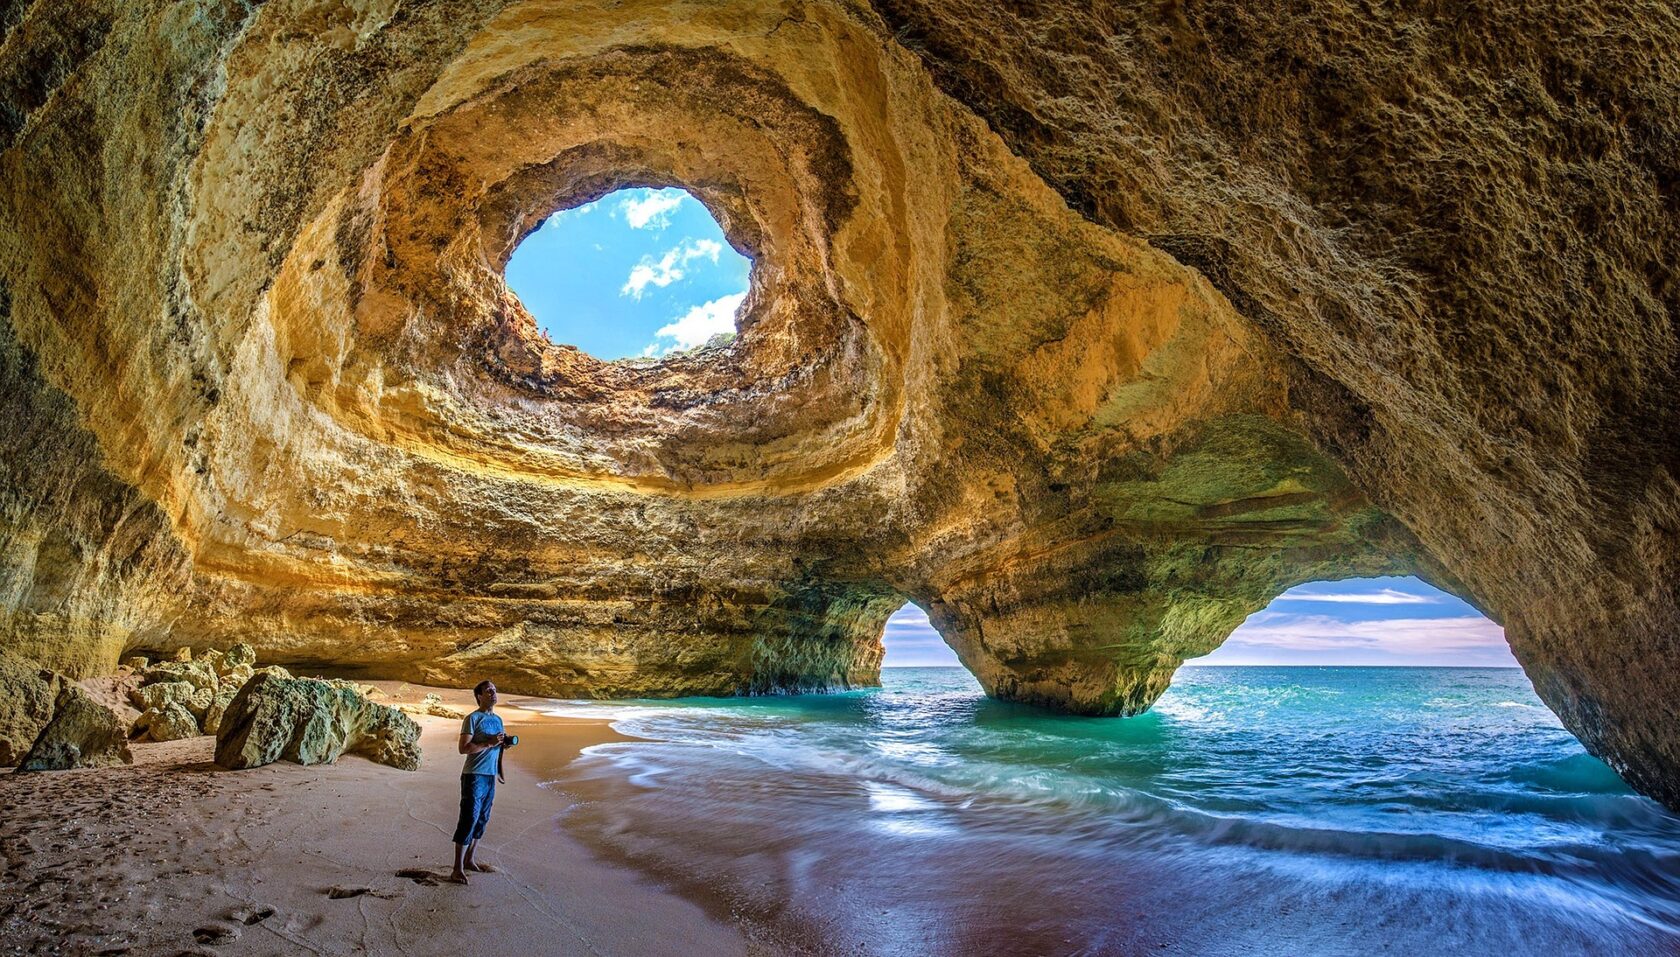 Caves in Algarve, Portugal (an Atlantis site).